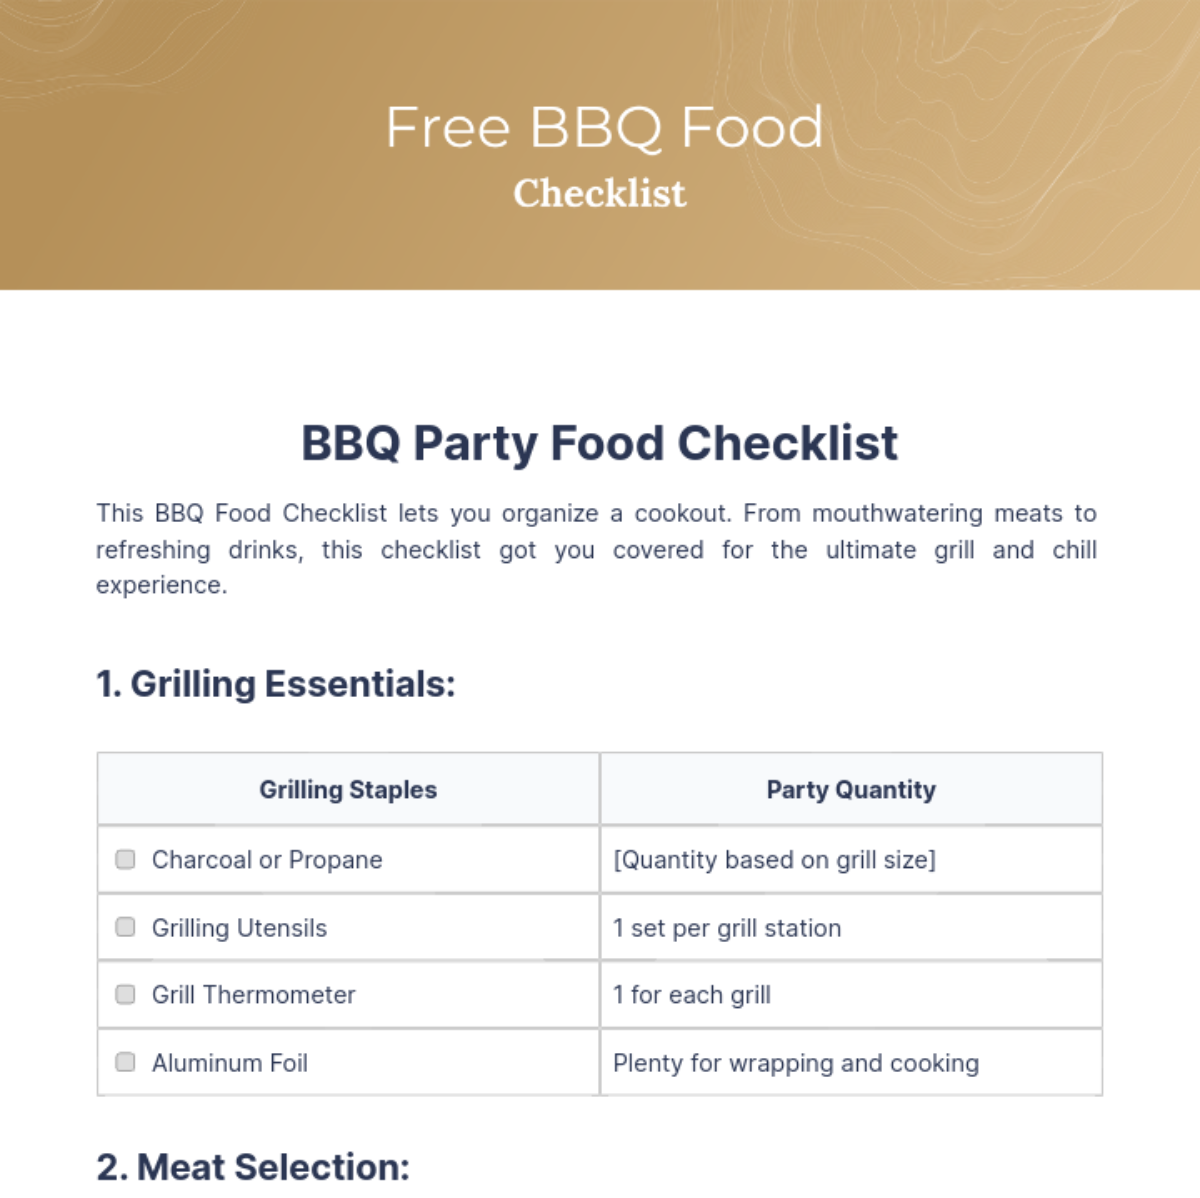 Free BBQ Food Checklist Template